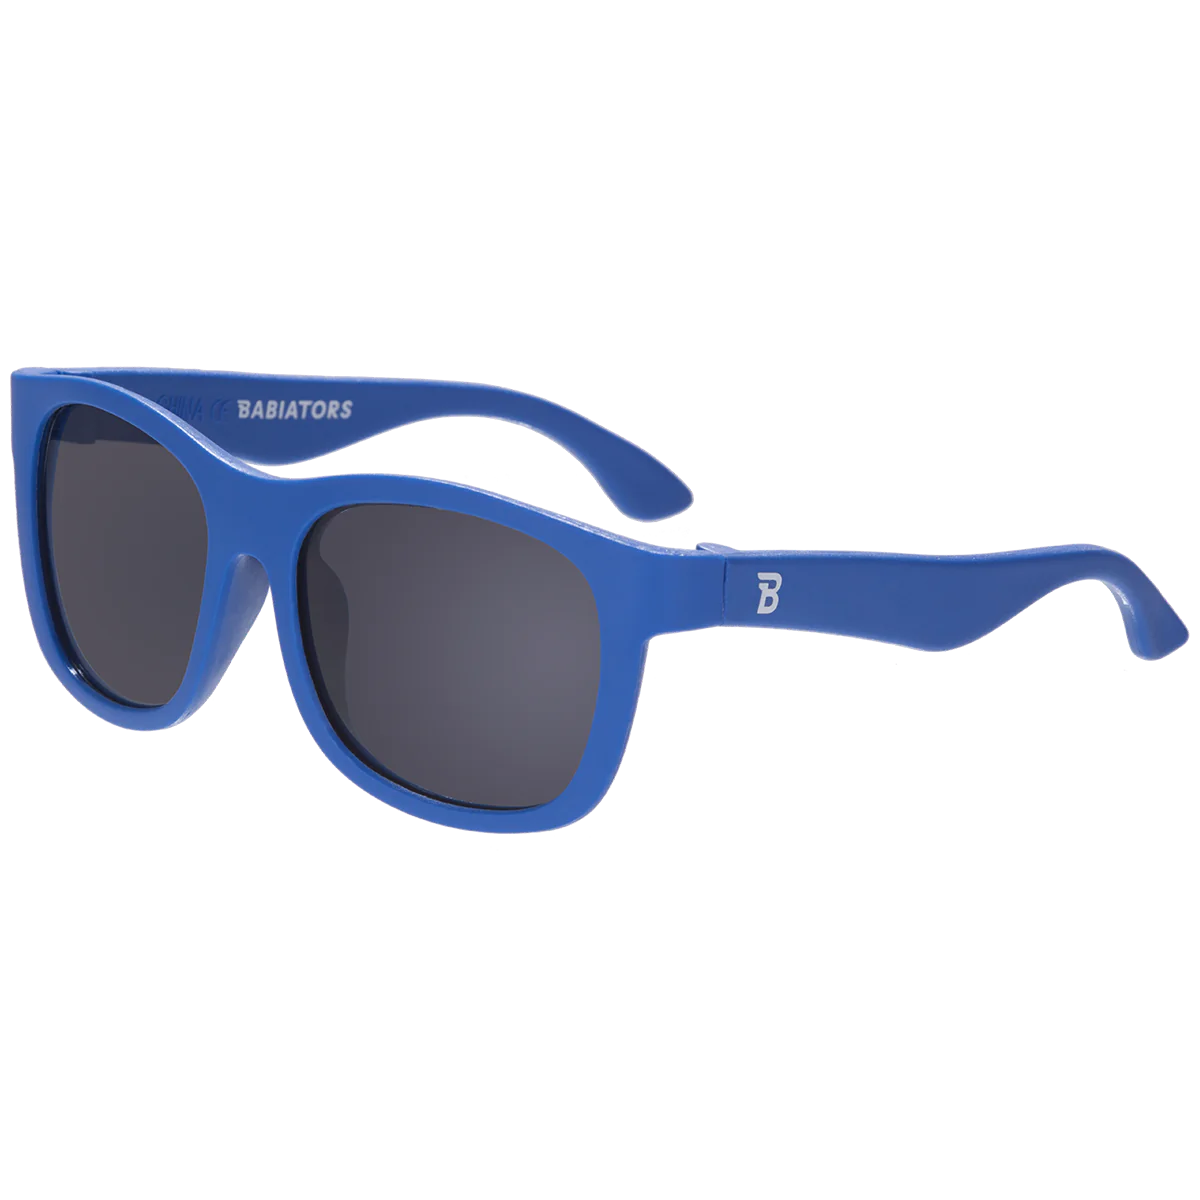 Babiators Original Navigators - Good As Blue Sunglasses Babiators 